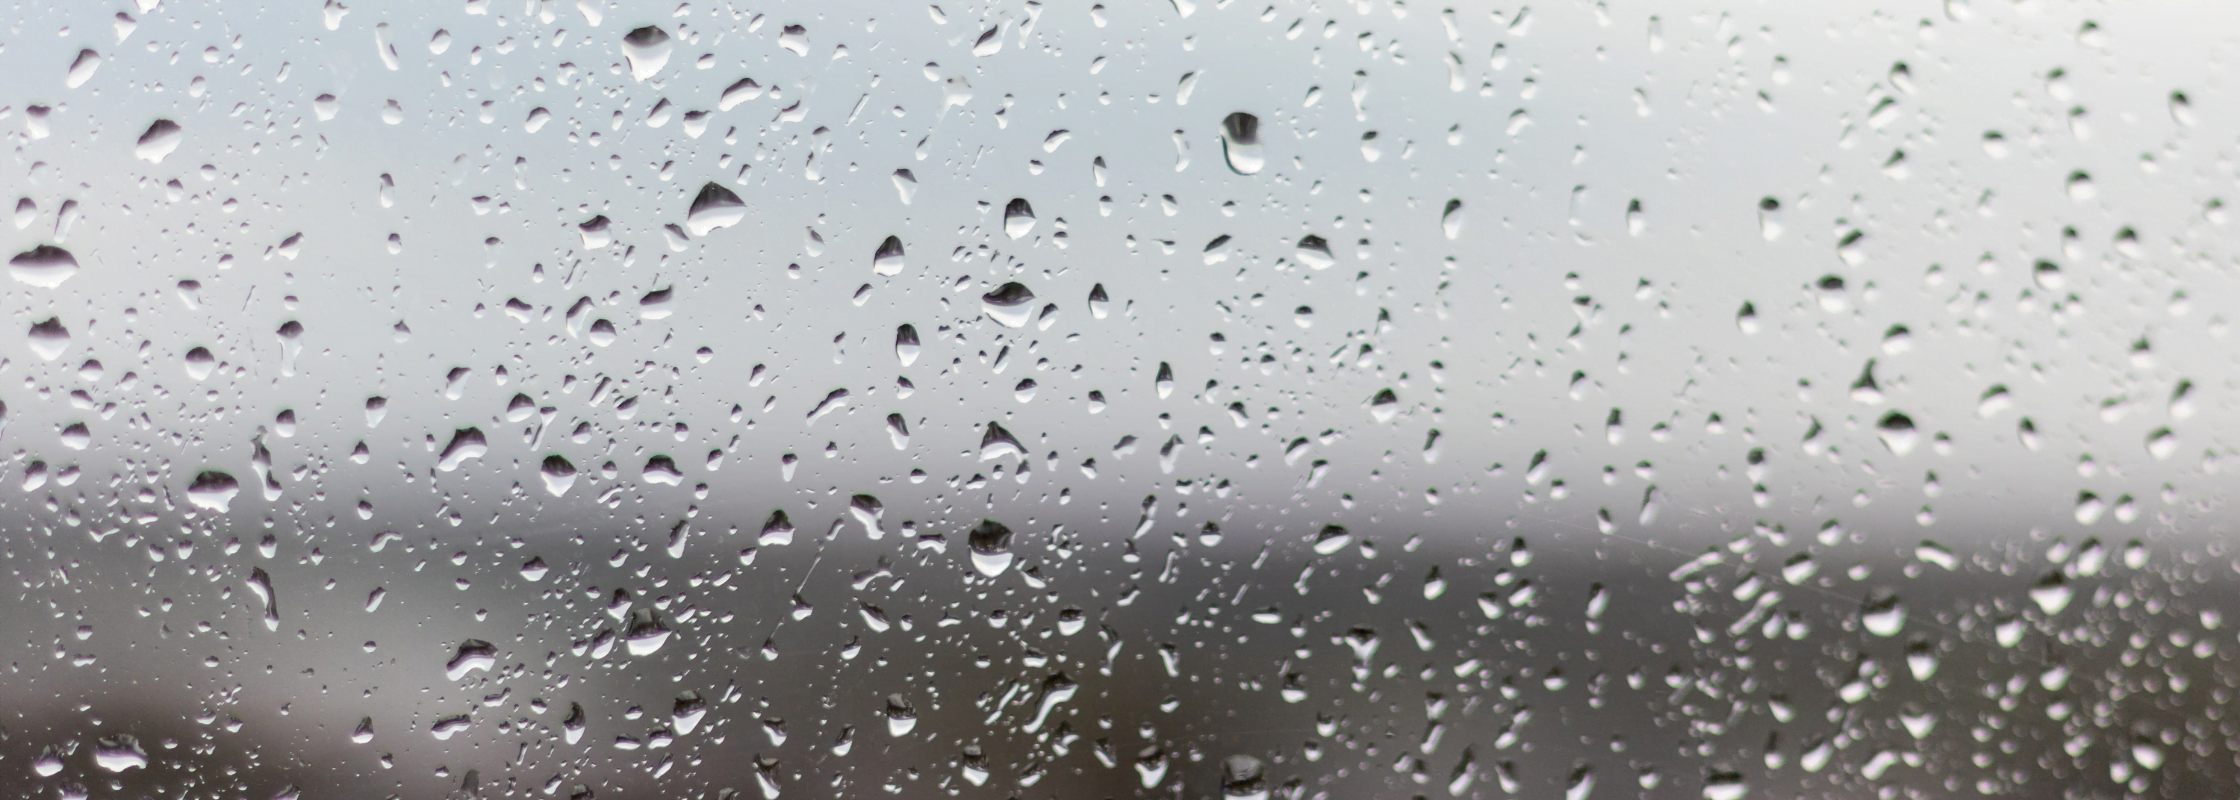 Rain droplets on window in saratoga